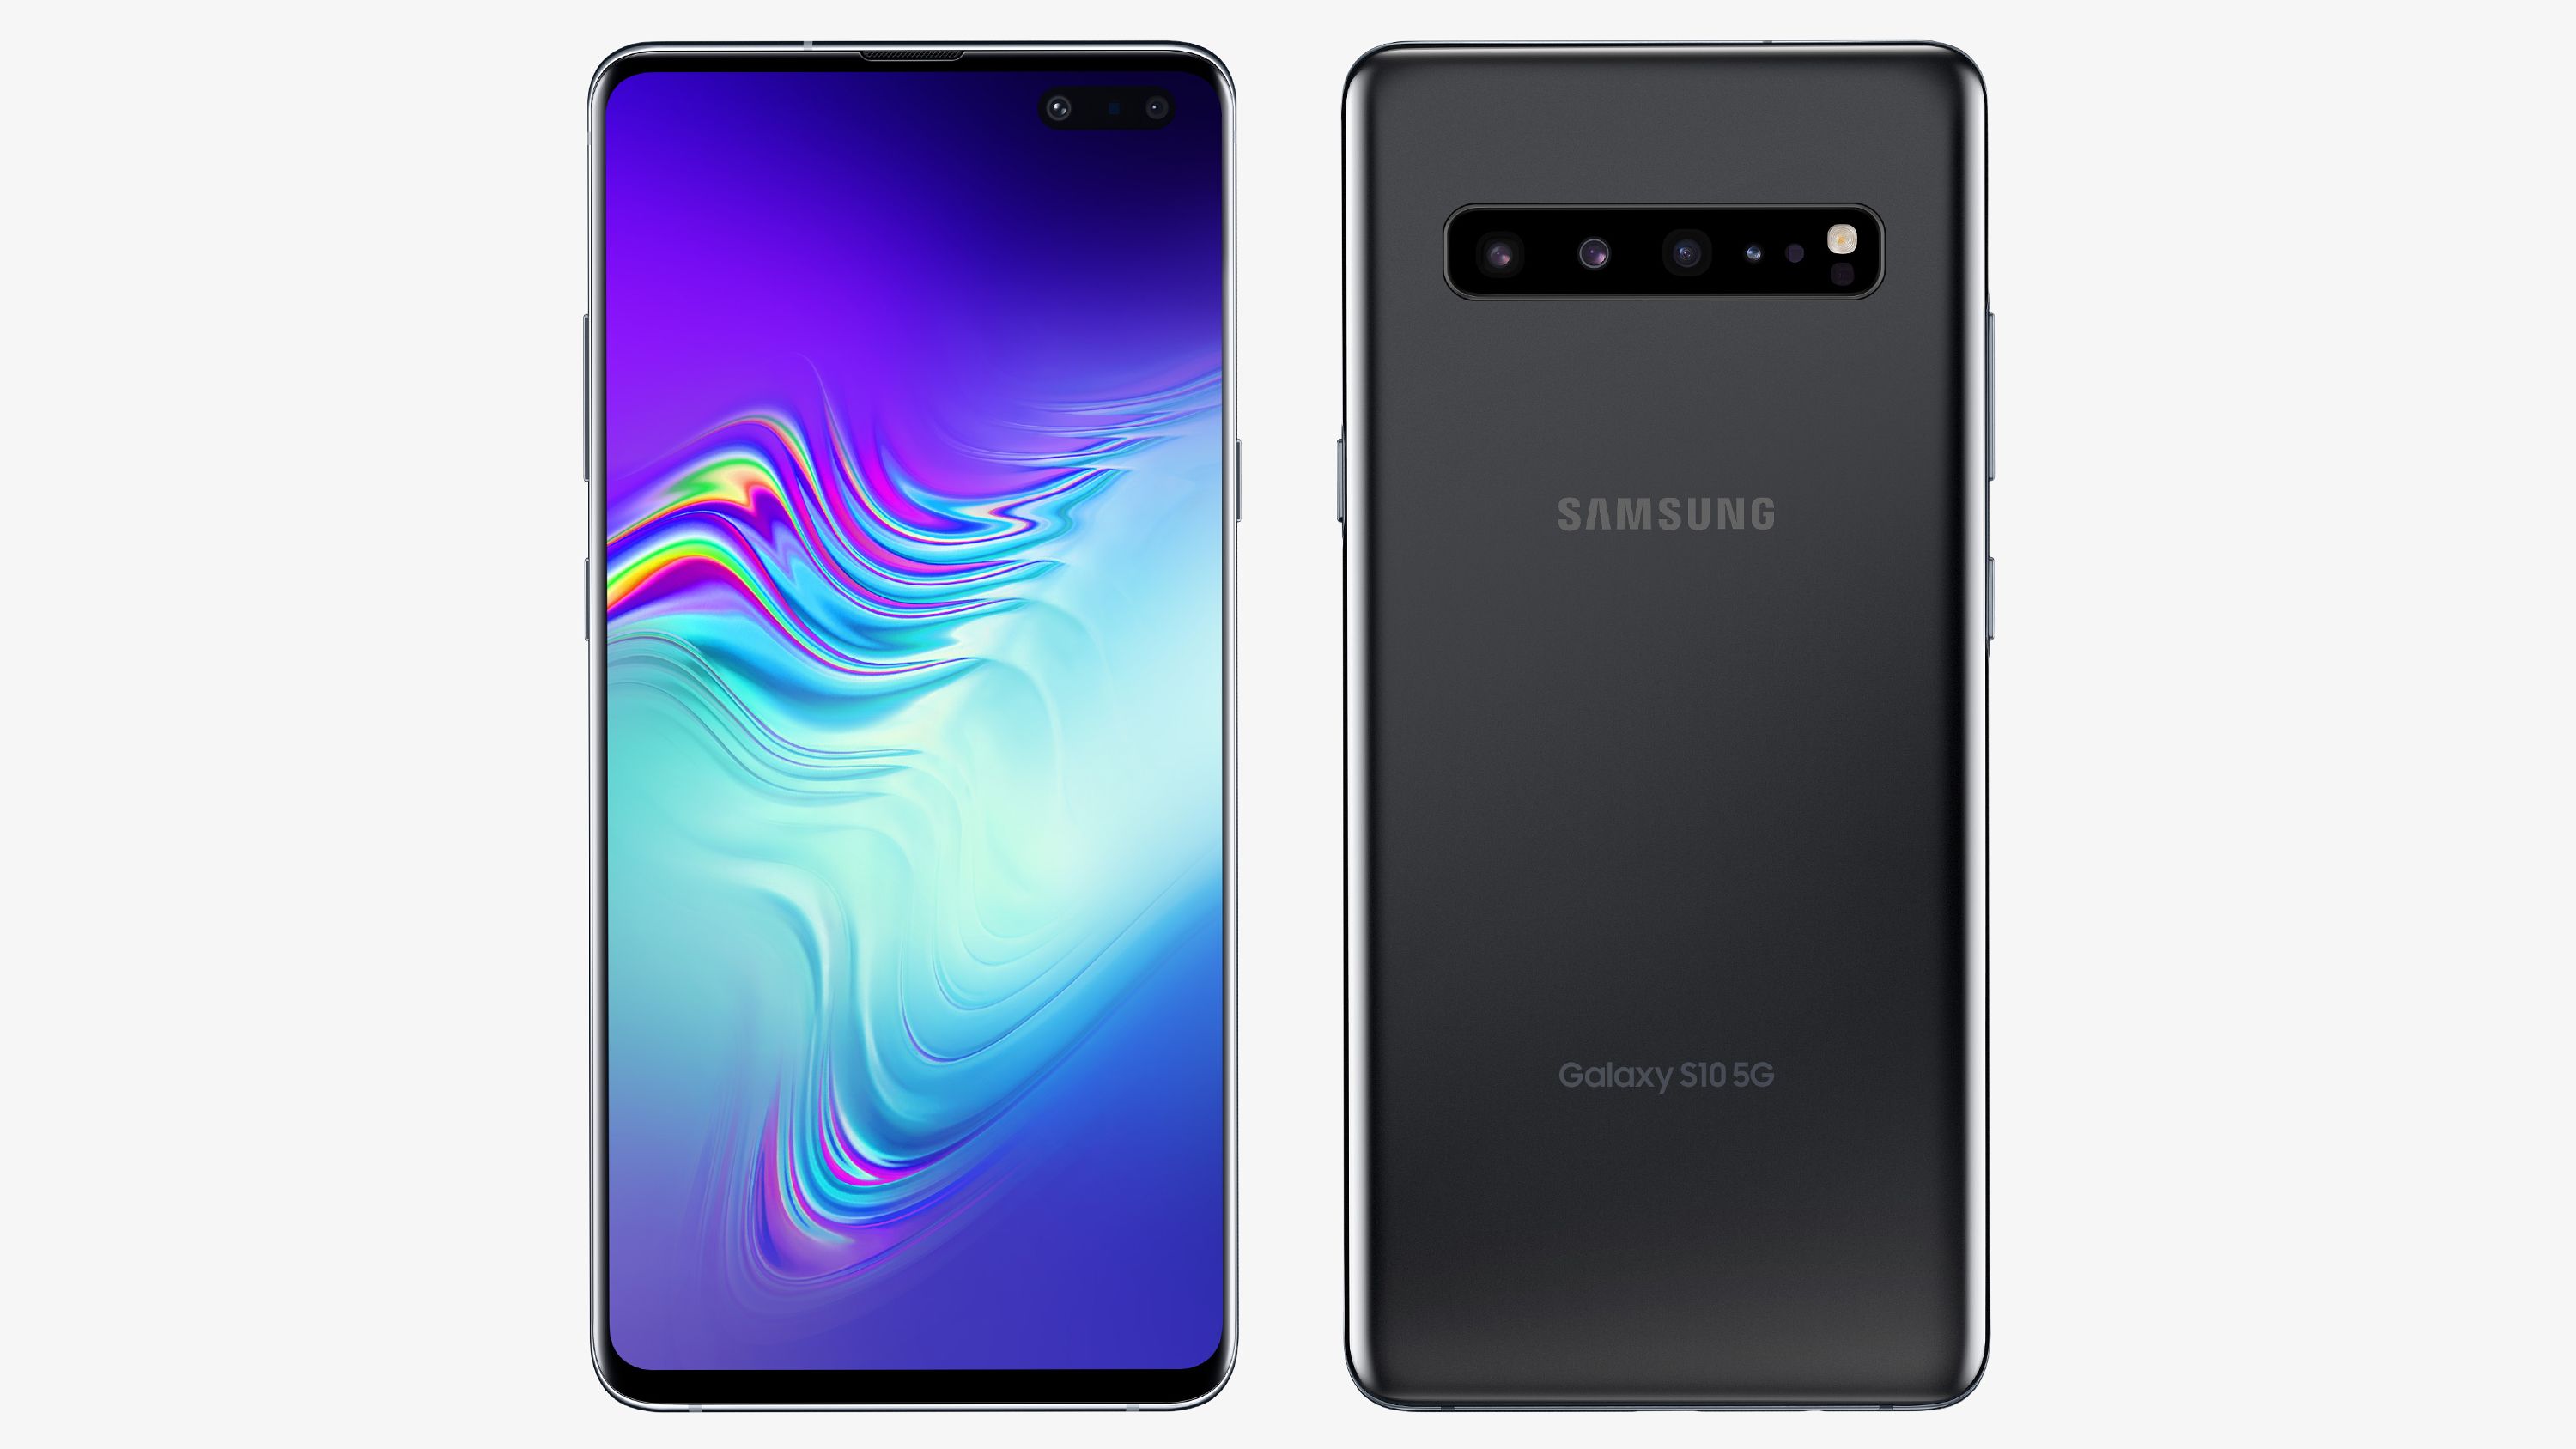 Самсунг смартфоны 2020 года модели. Samsung s10 5g 512gb. Samsung Galaxy s10 5g 256gb. Samsung Galaxy s10 SM-g973f. Samsung Galaxy s10 / s10 +.